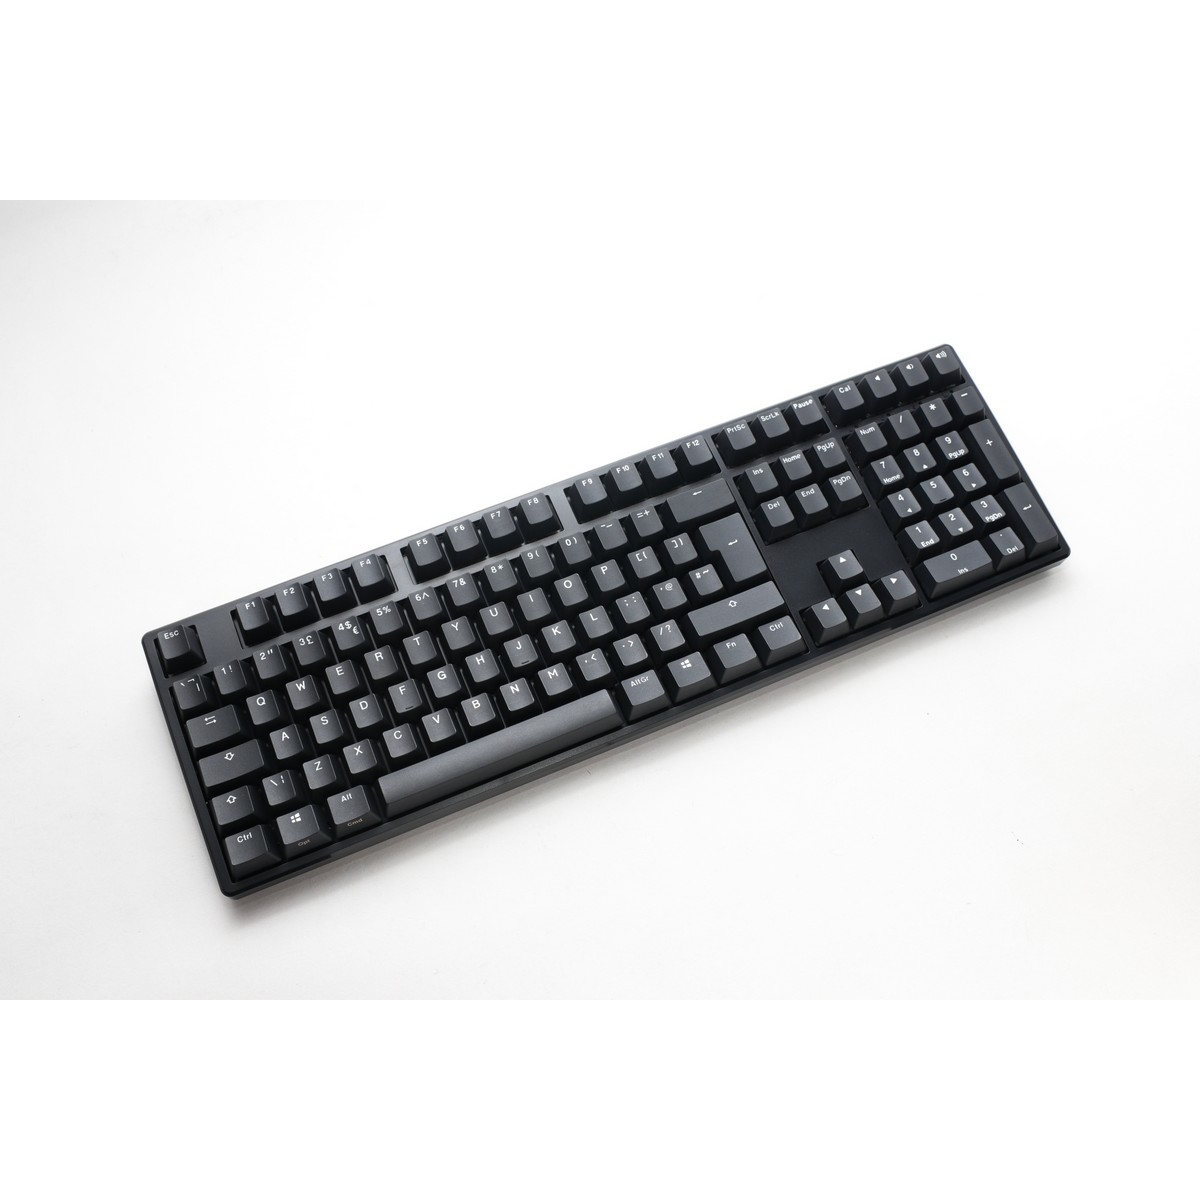 Ducky - Ducky Origin USB Mechanical Gaming Keyboard Cherry MX Blue - Black UK Layout